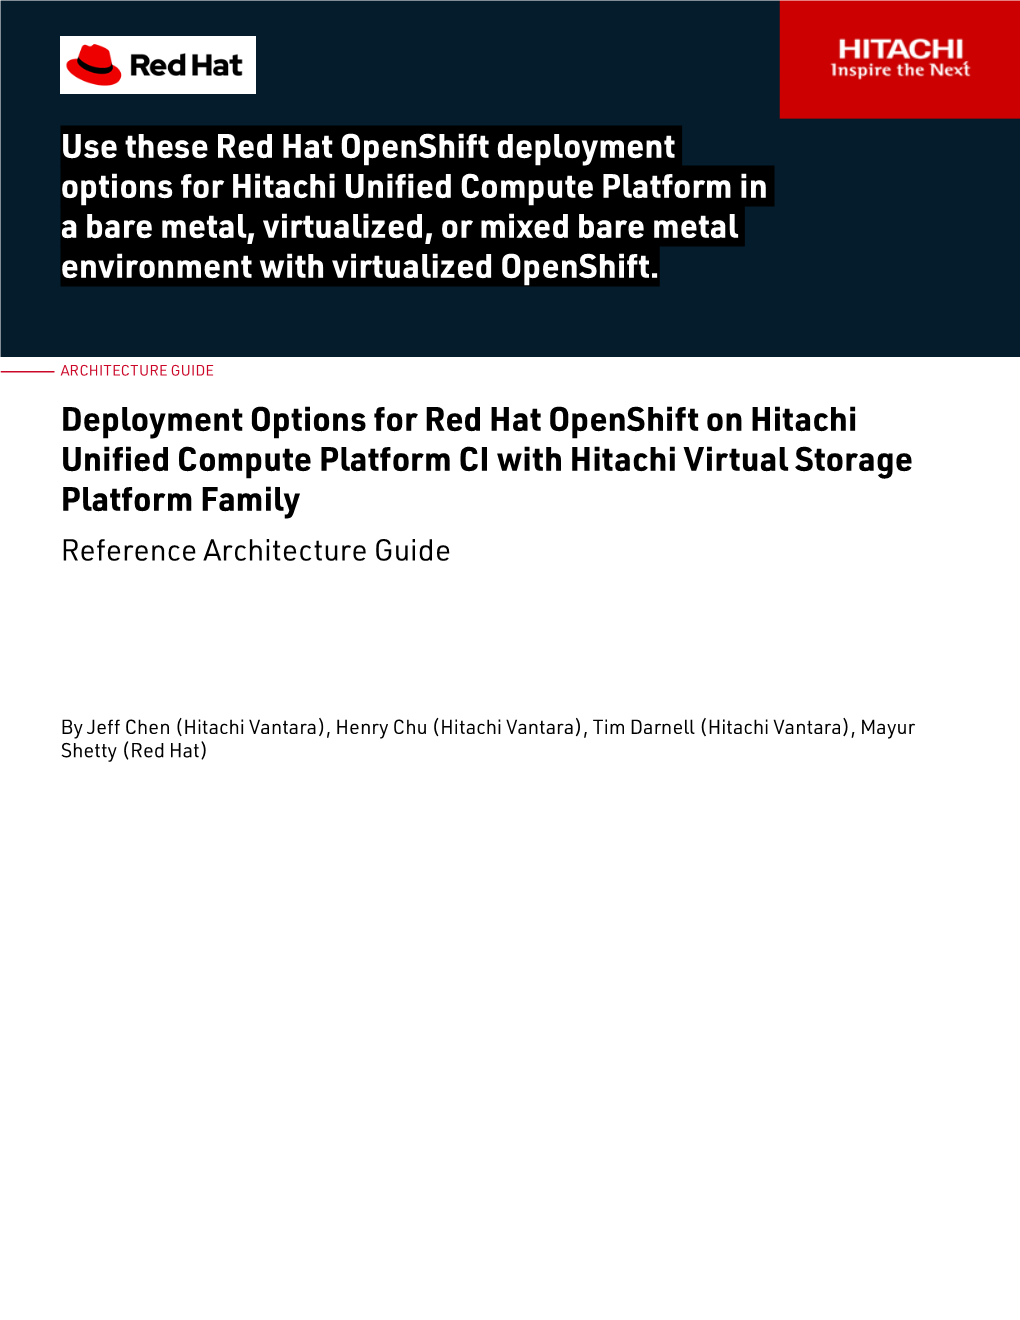 Deployment Options for Red Hat Enterprise Linux Openshift On